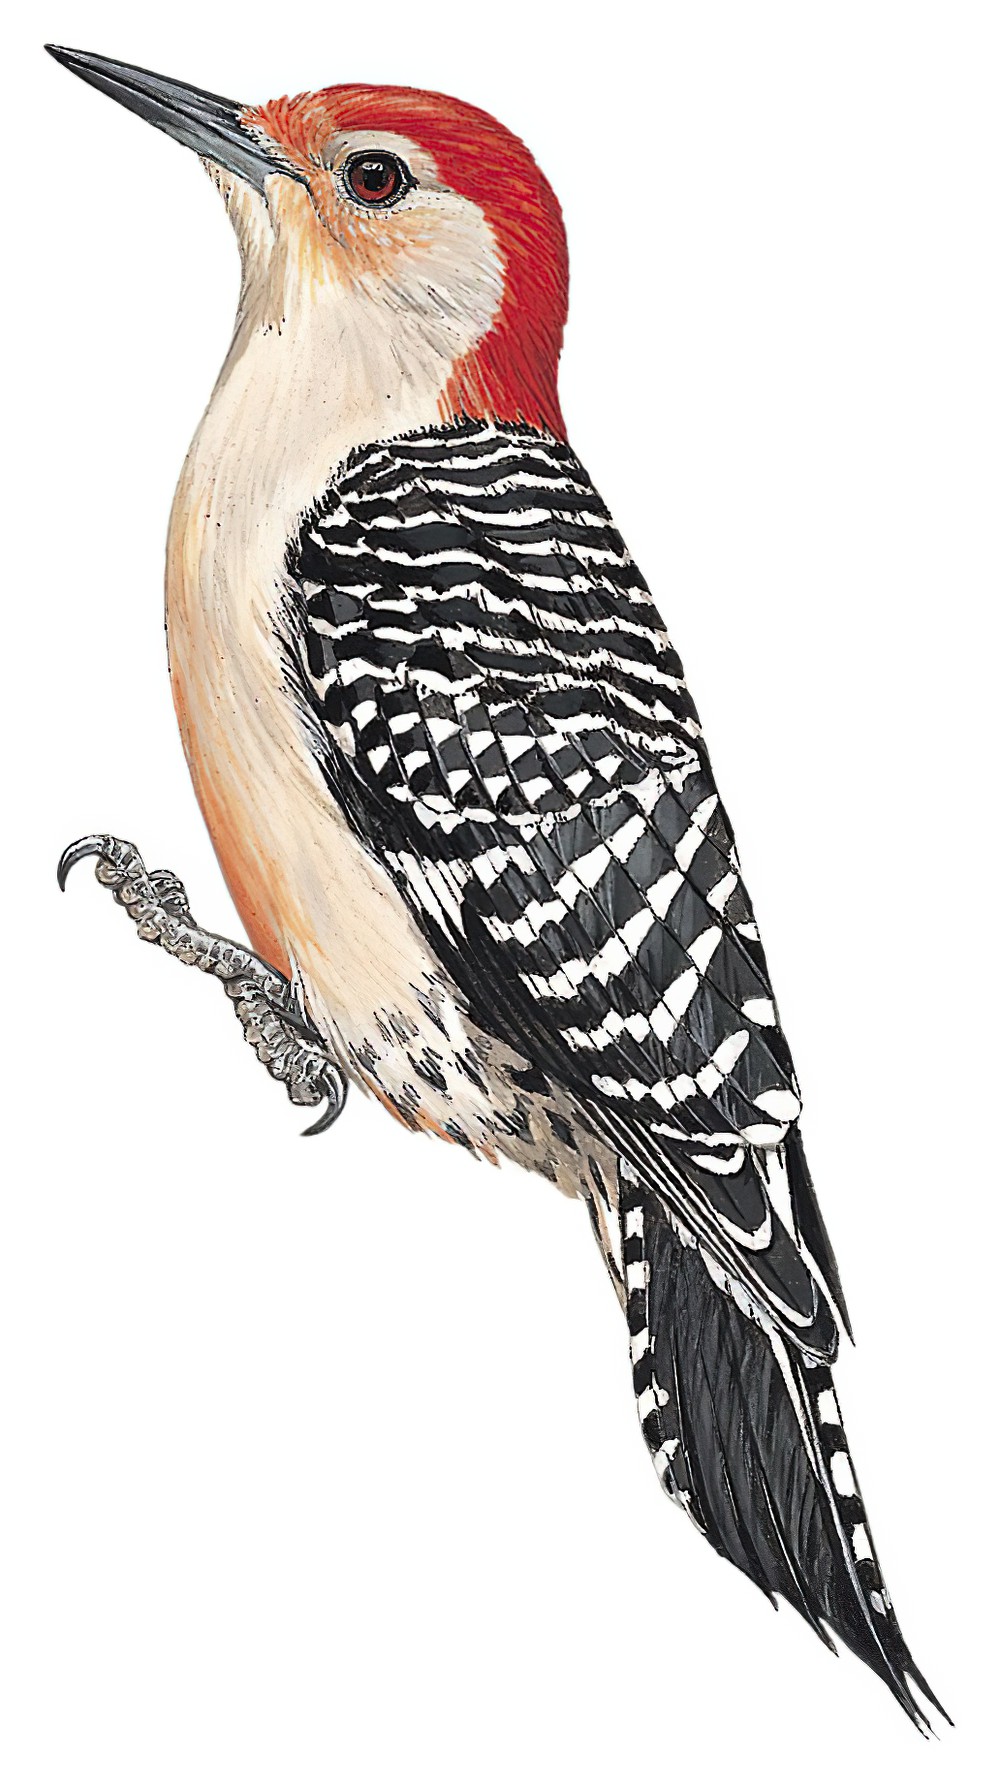 Red-bellied Woodpecker / Melanerpes carolinus